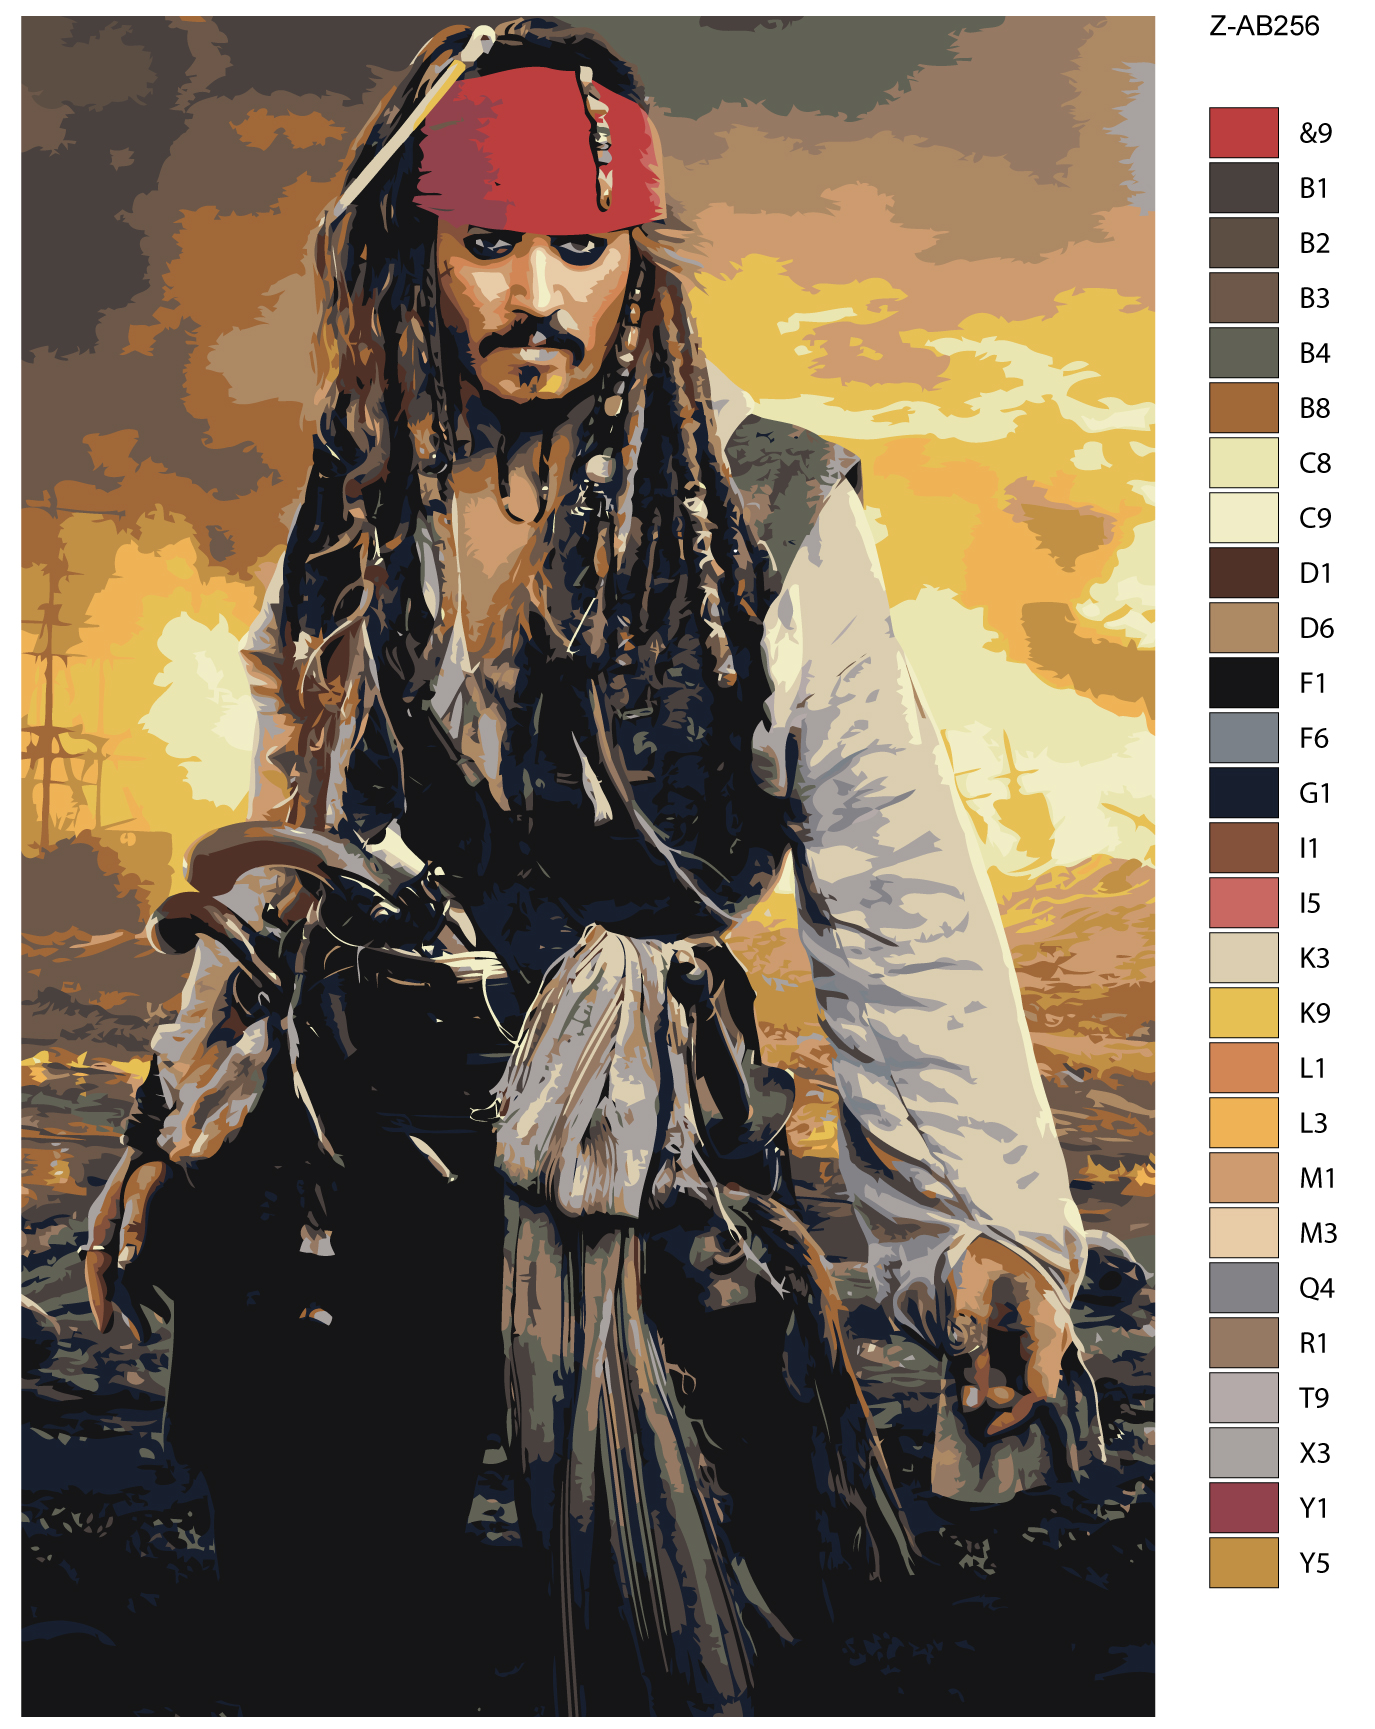 Хорошо 256. Картина по номерам пираты Карибского моря. Картина по номерам Джек Воробей. Пираты Карибского моря арты. Капитан Джек Воробей картина по номерам.